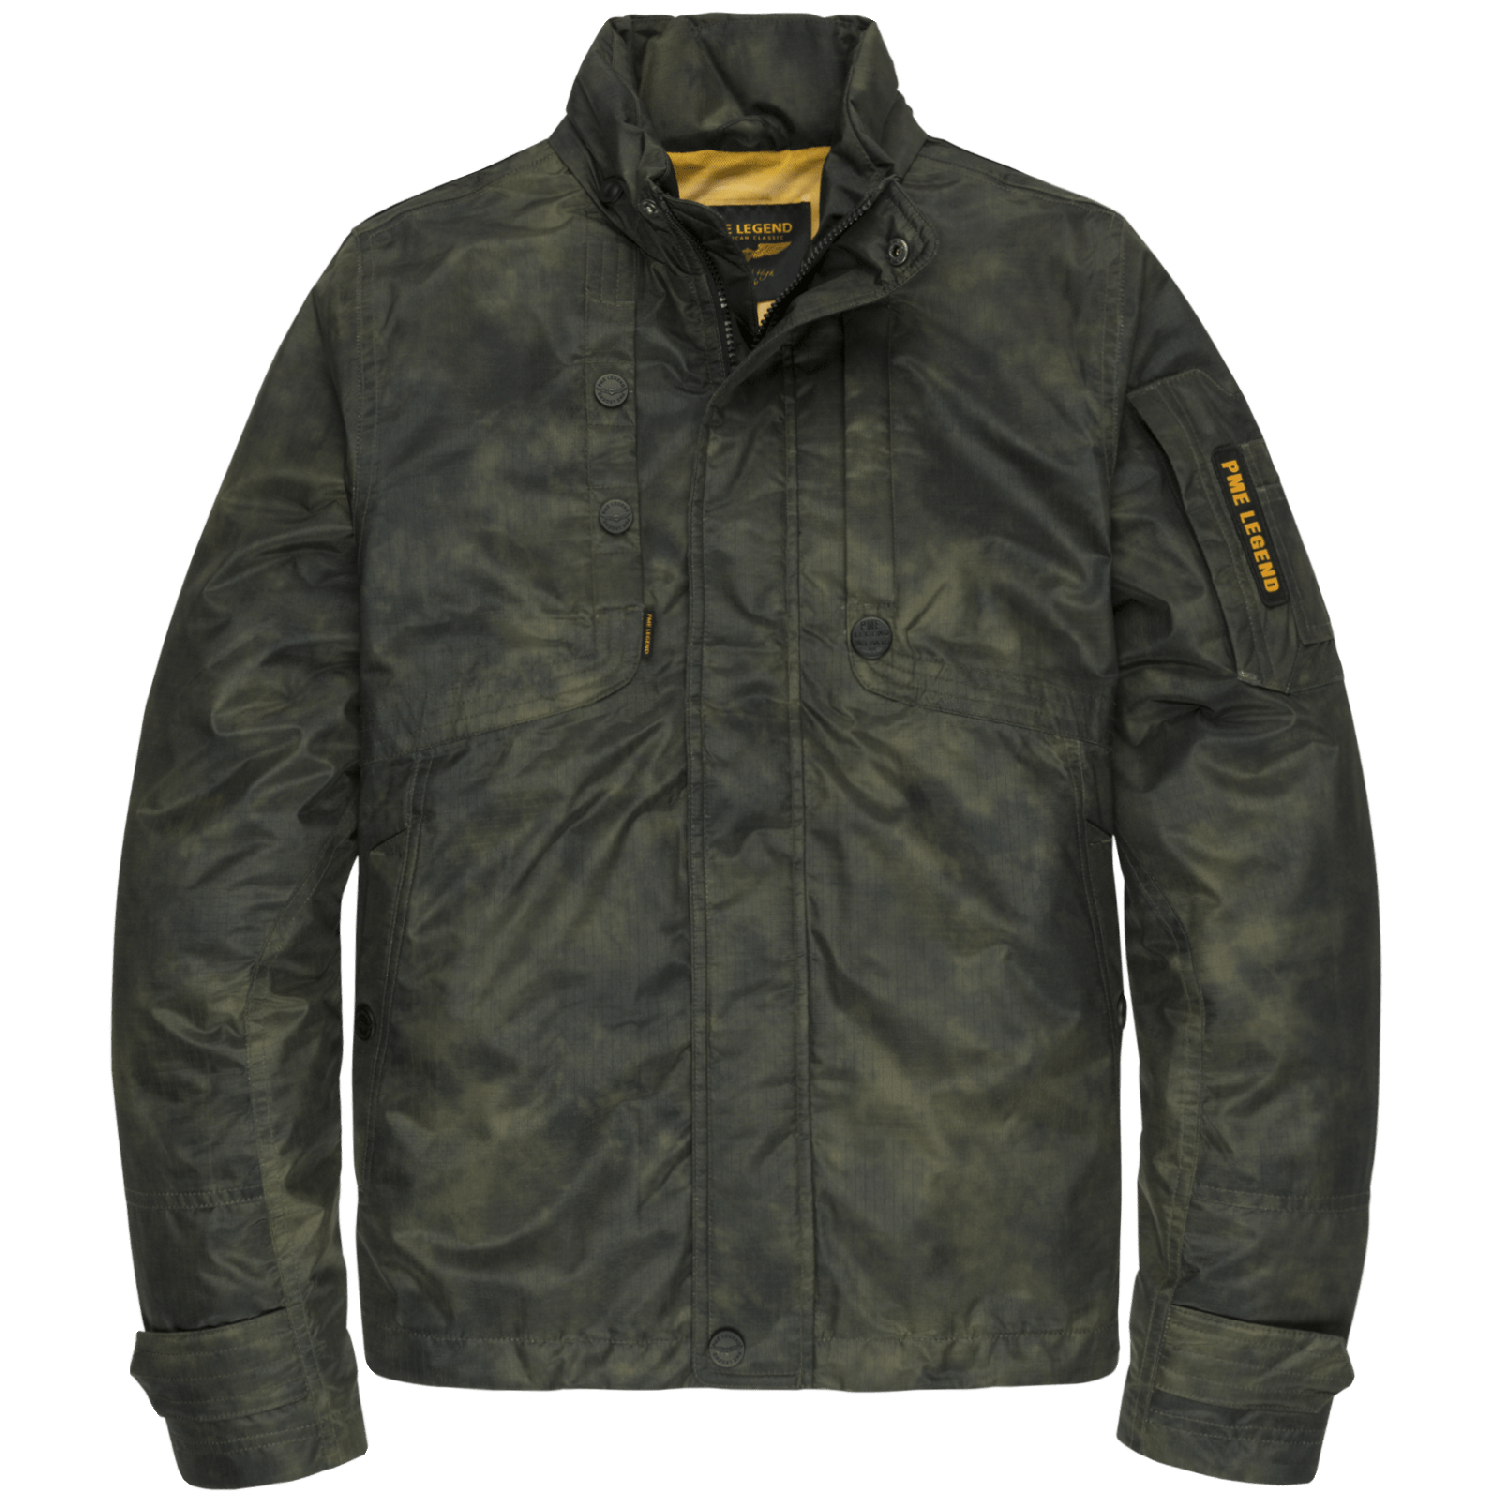 PME legend zip jacket rip camou airpack deep depth